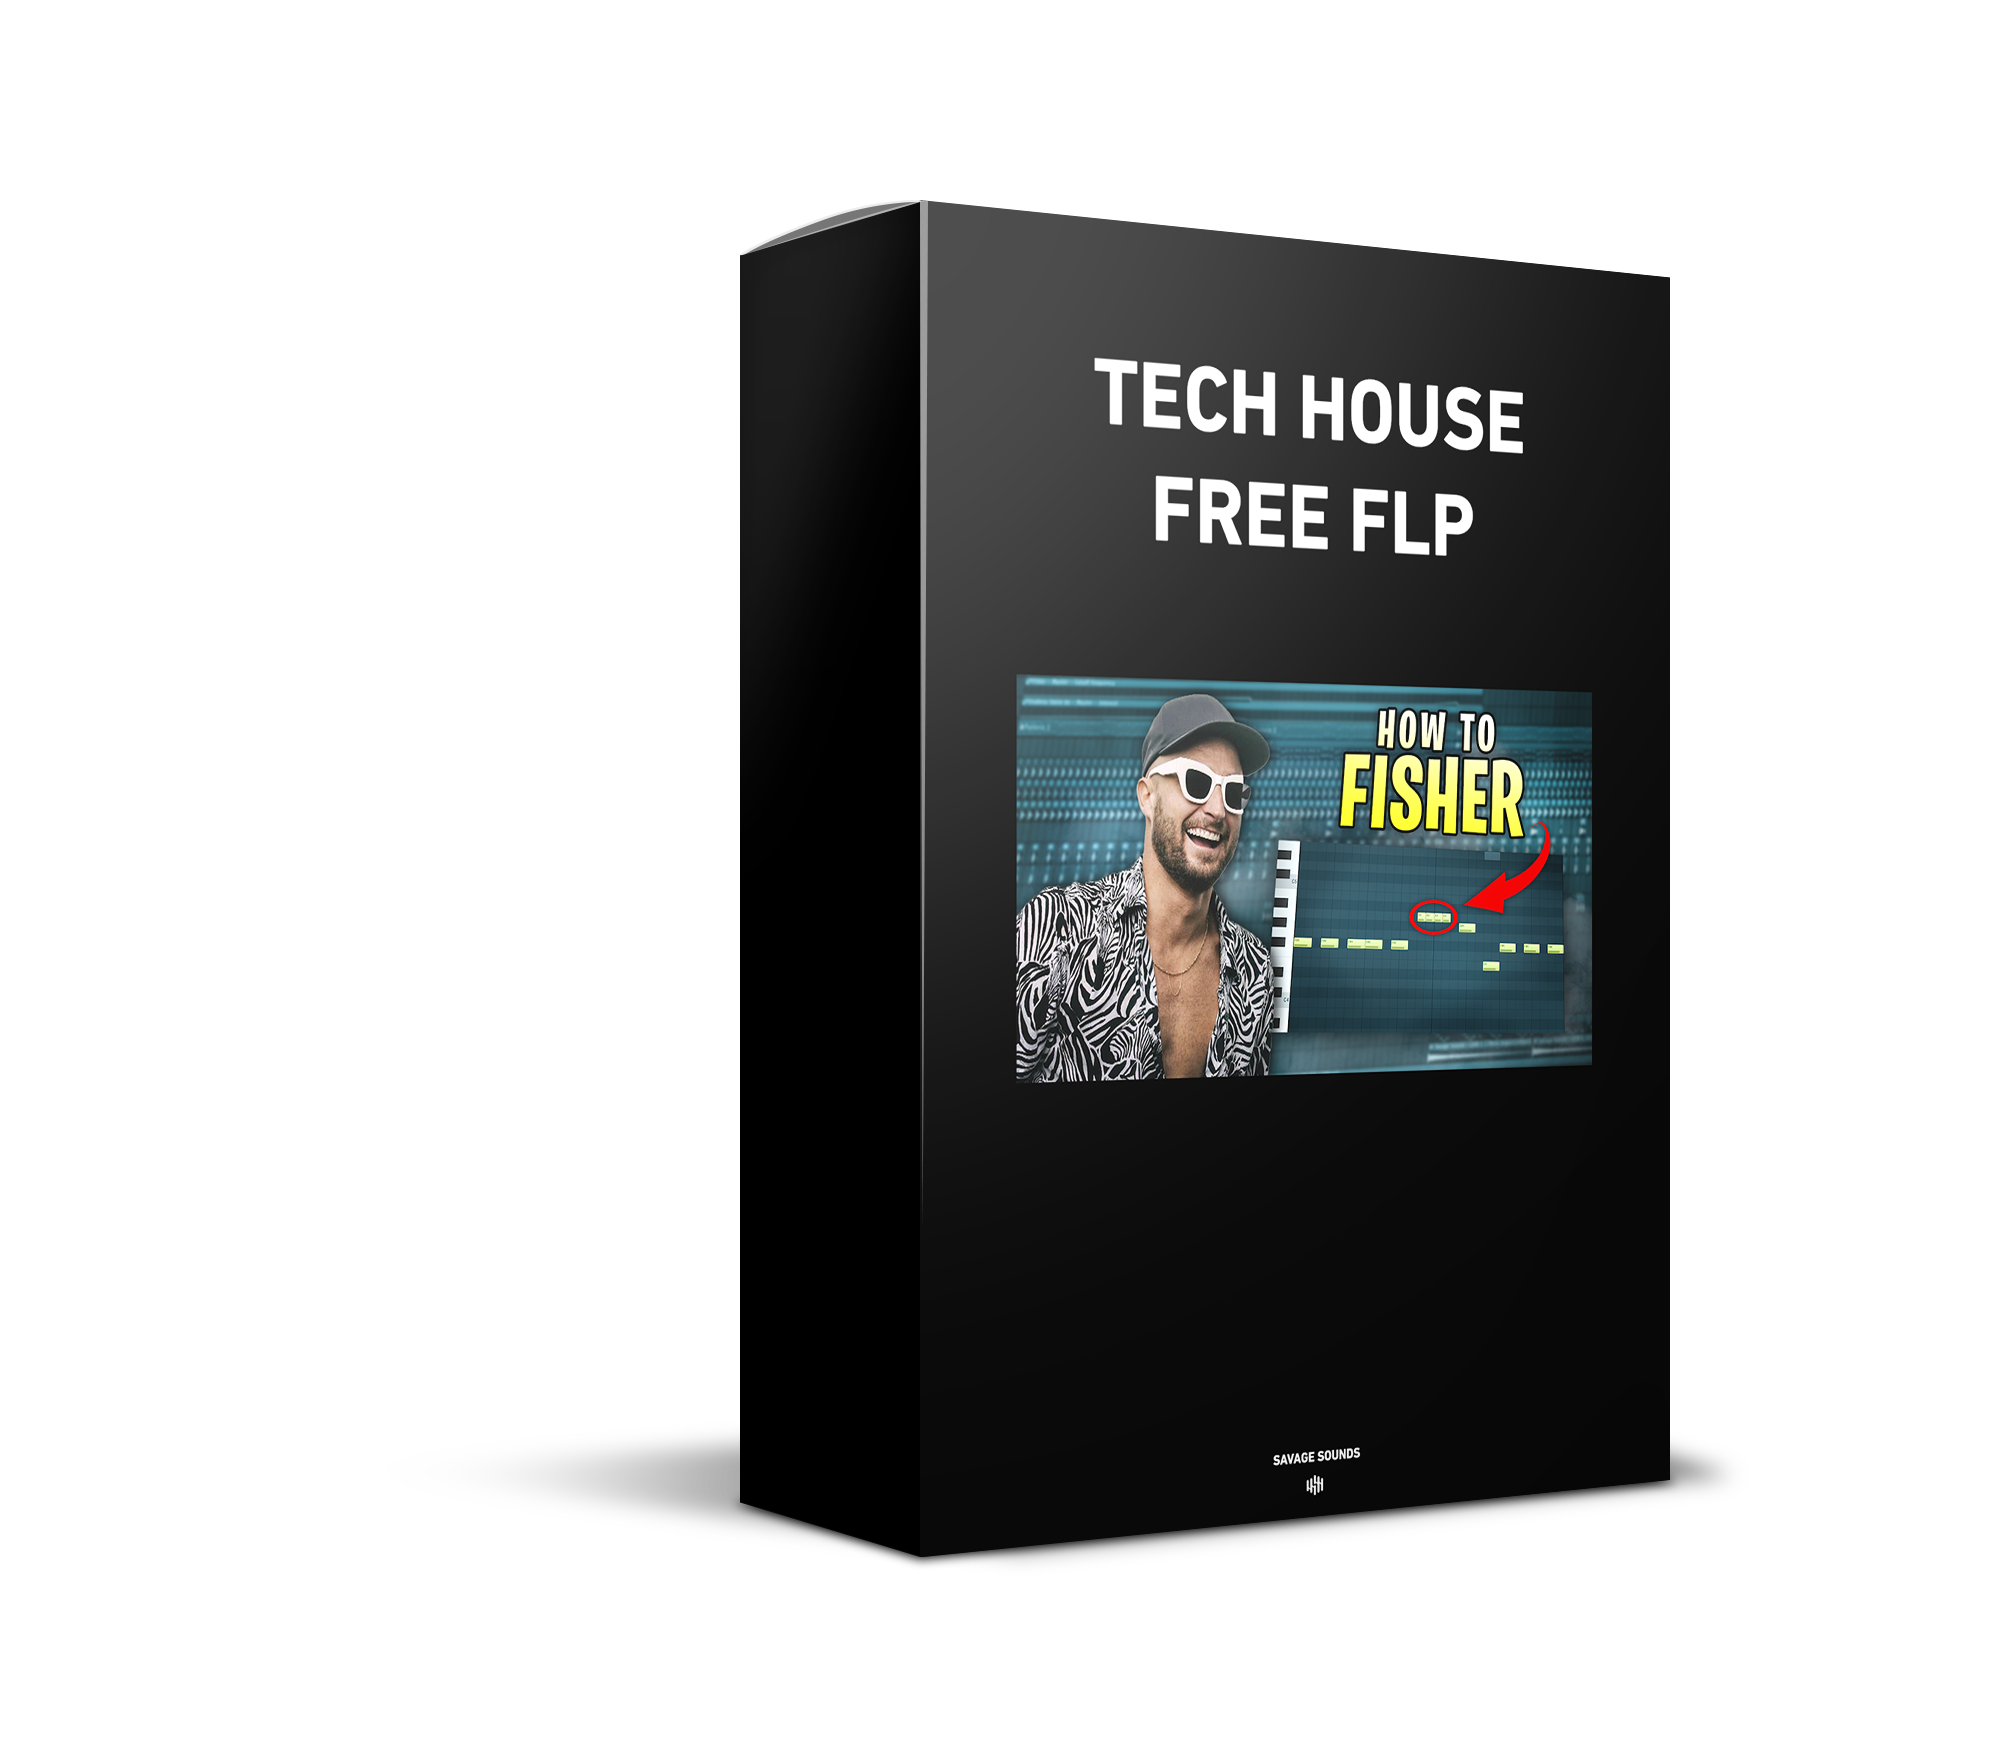 Tech House (FISHER Style) - FREE FLP